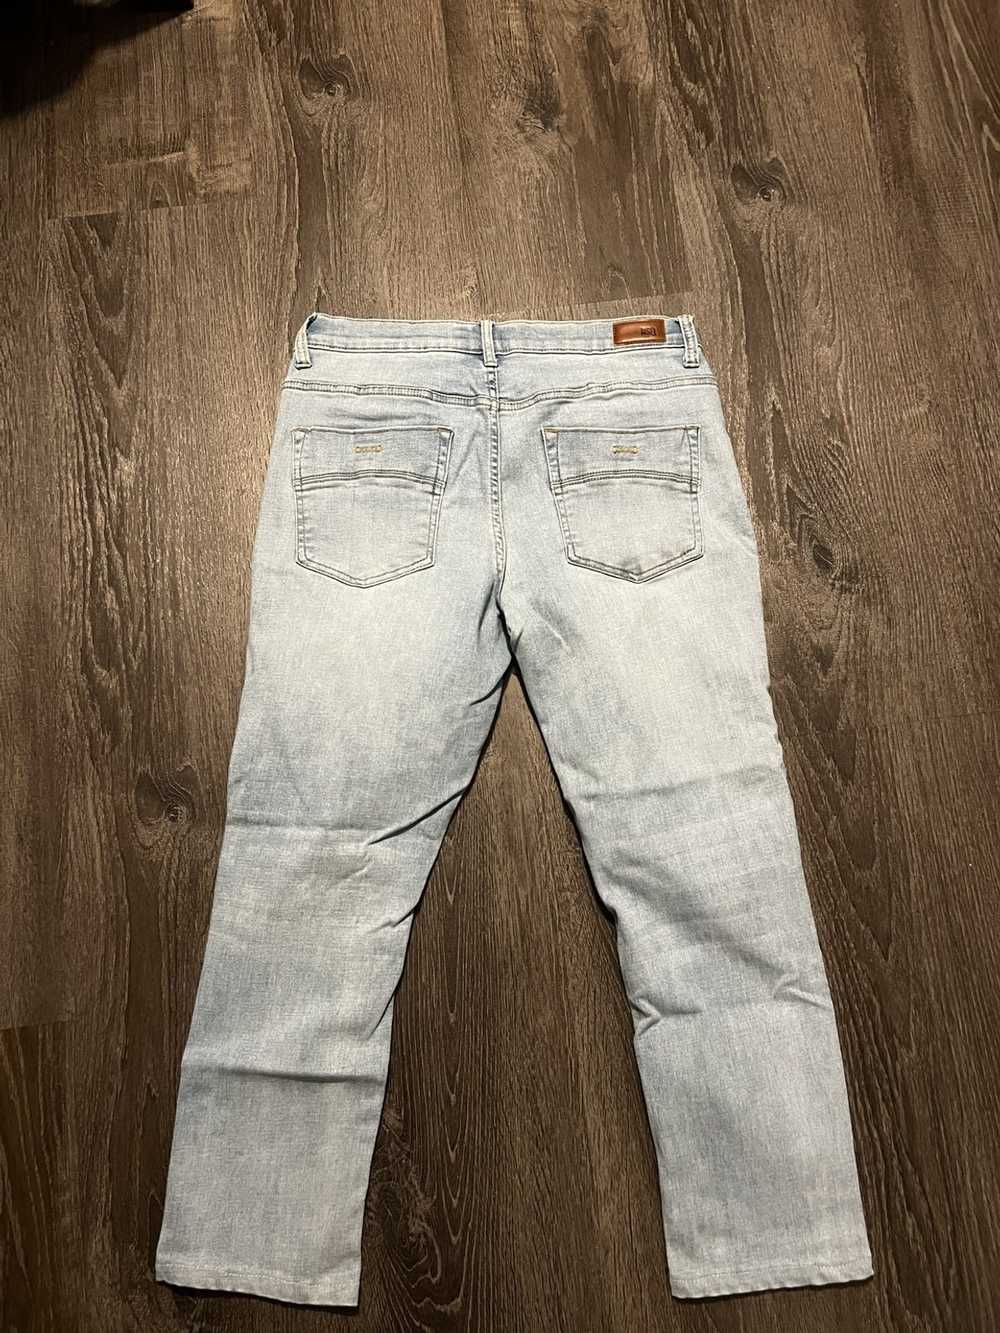 Rsq mens jeans - Gem